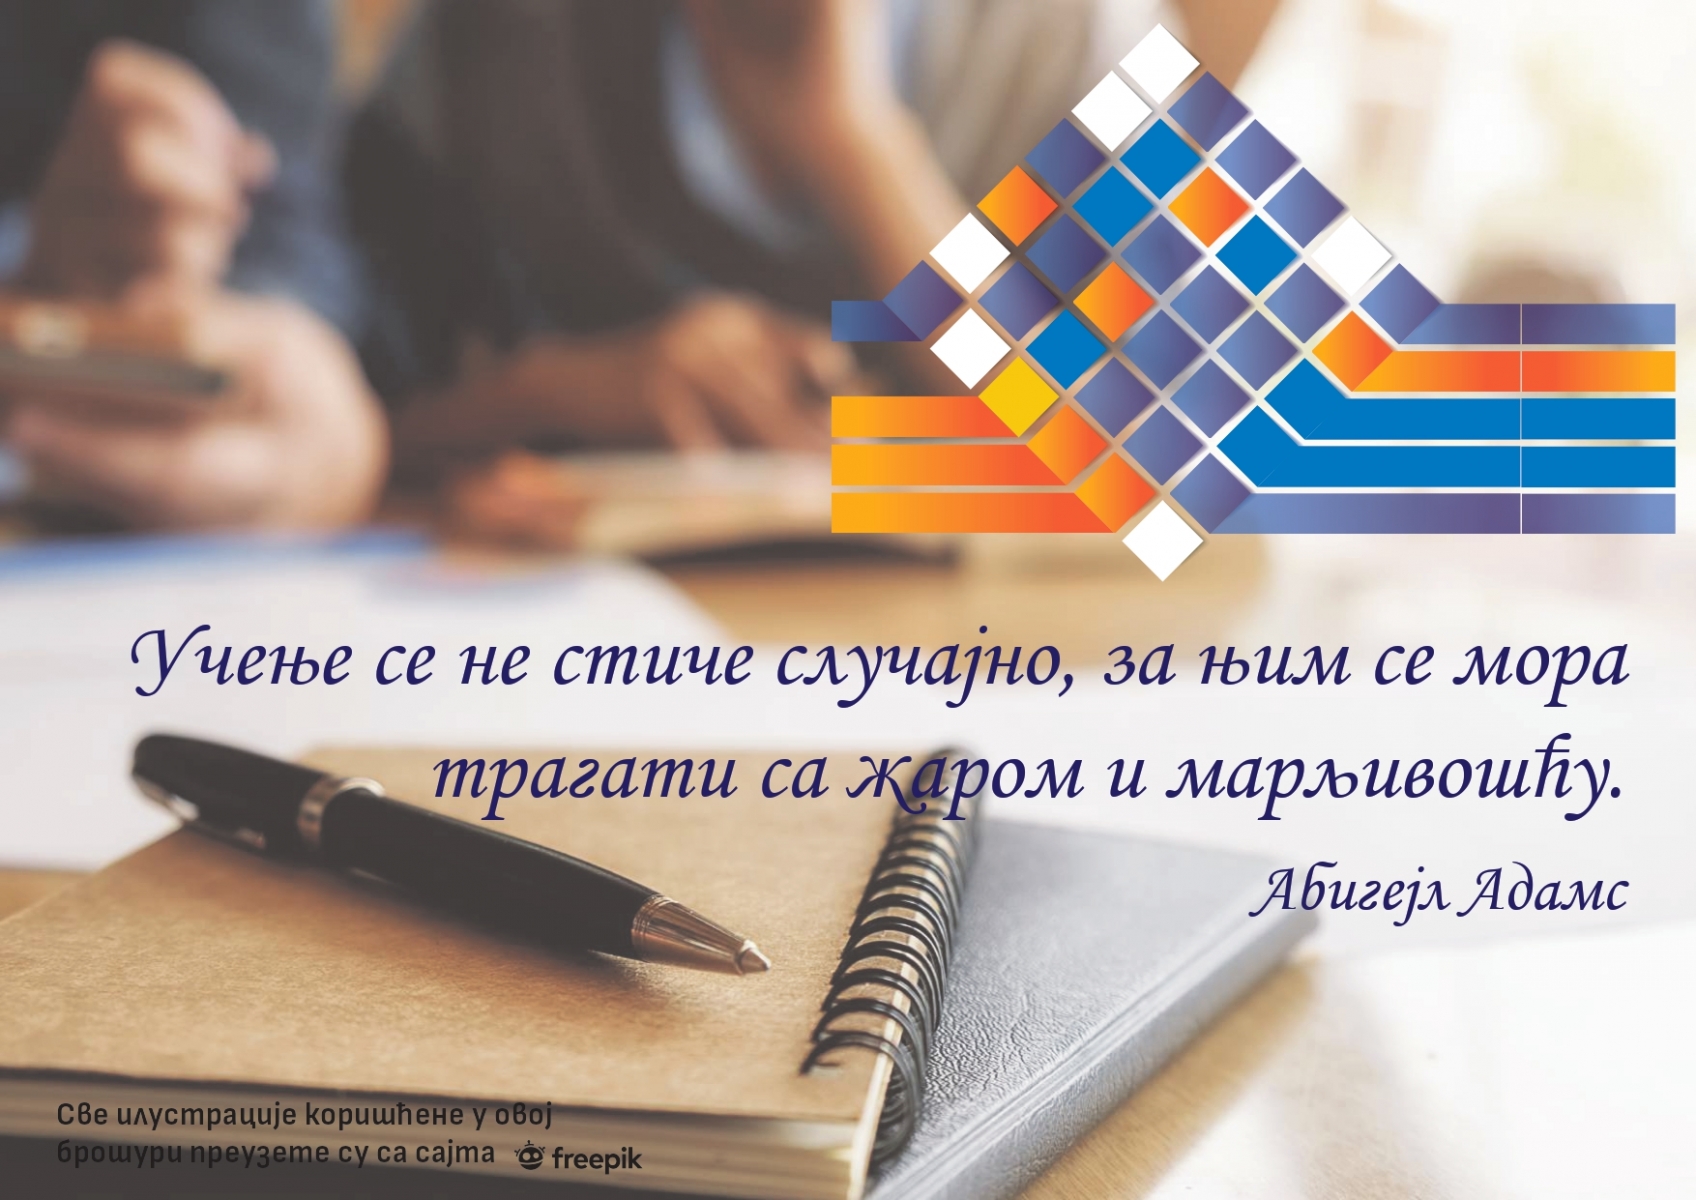 Katalog-akreditovanih-seminara-Centar-za-obrazovanje-Kragujevac_compressed-1_page-0018